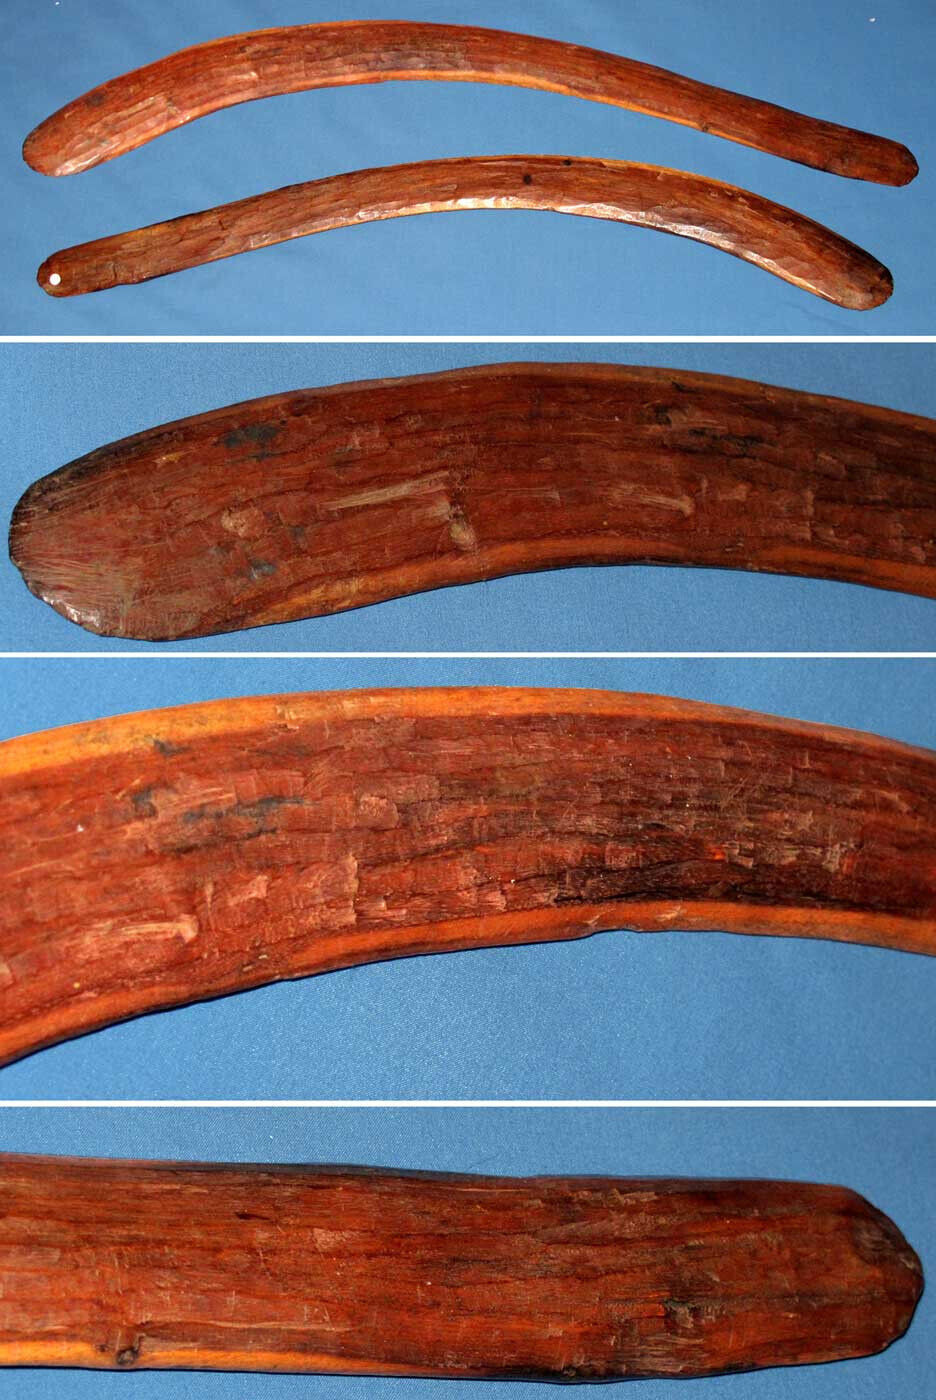 K96 - Aboriginal Hunting Boomerang from the Central Desert of Australia